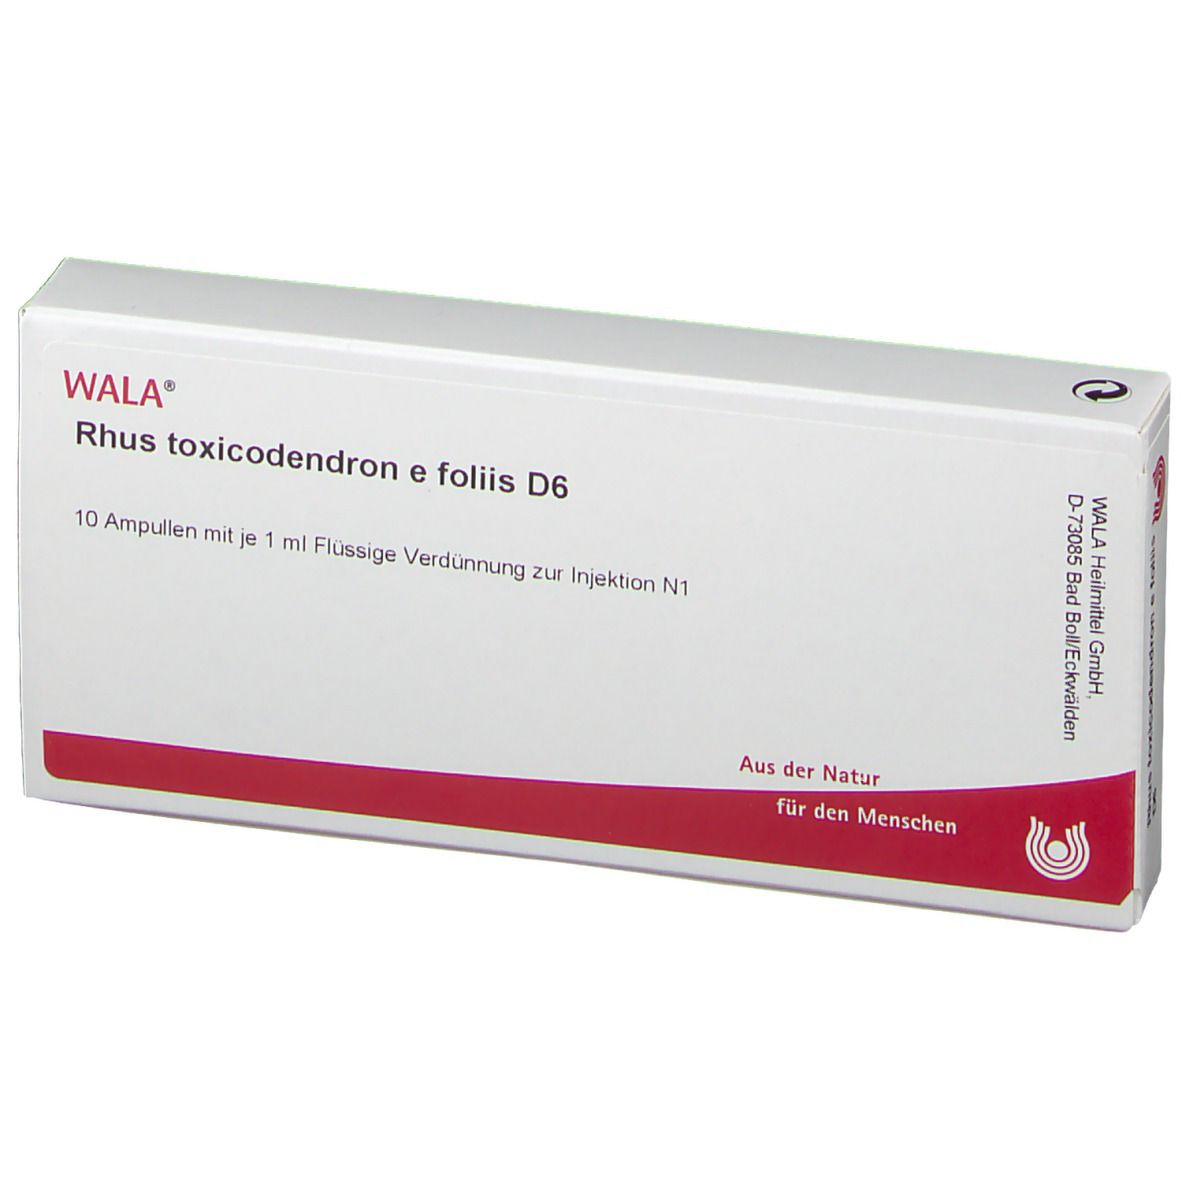 WALA® Rhus toxicodendron e foliis D 6